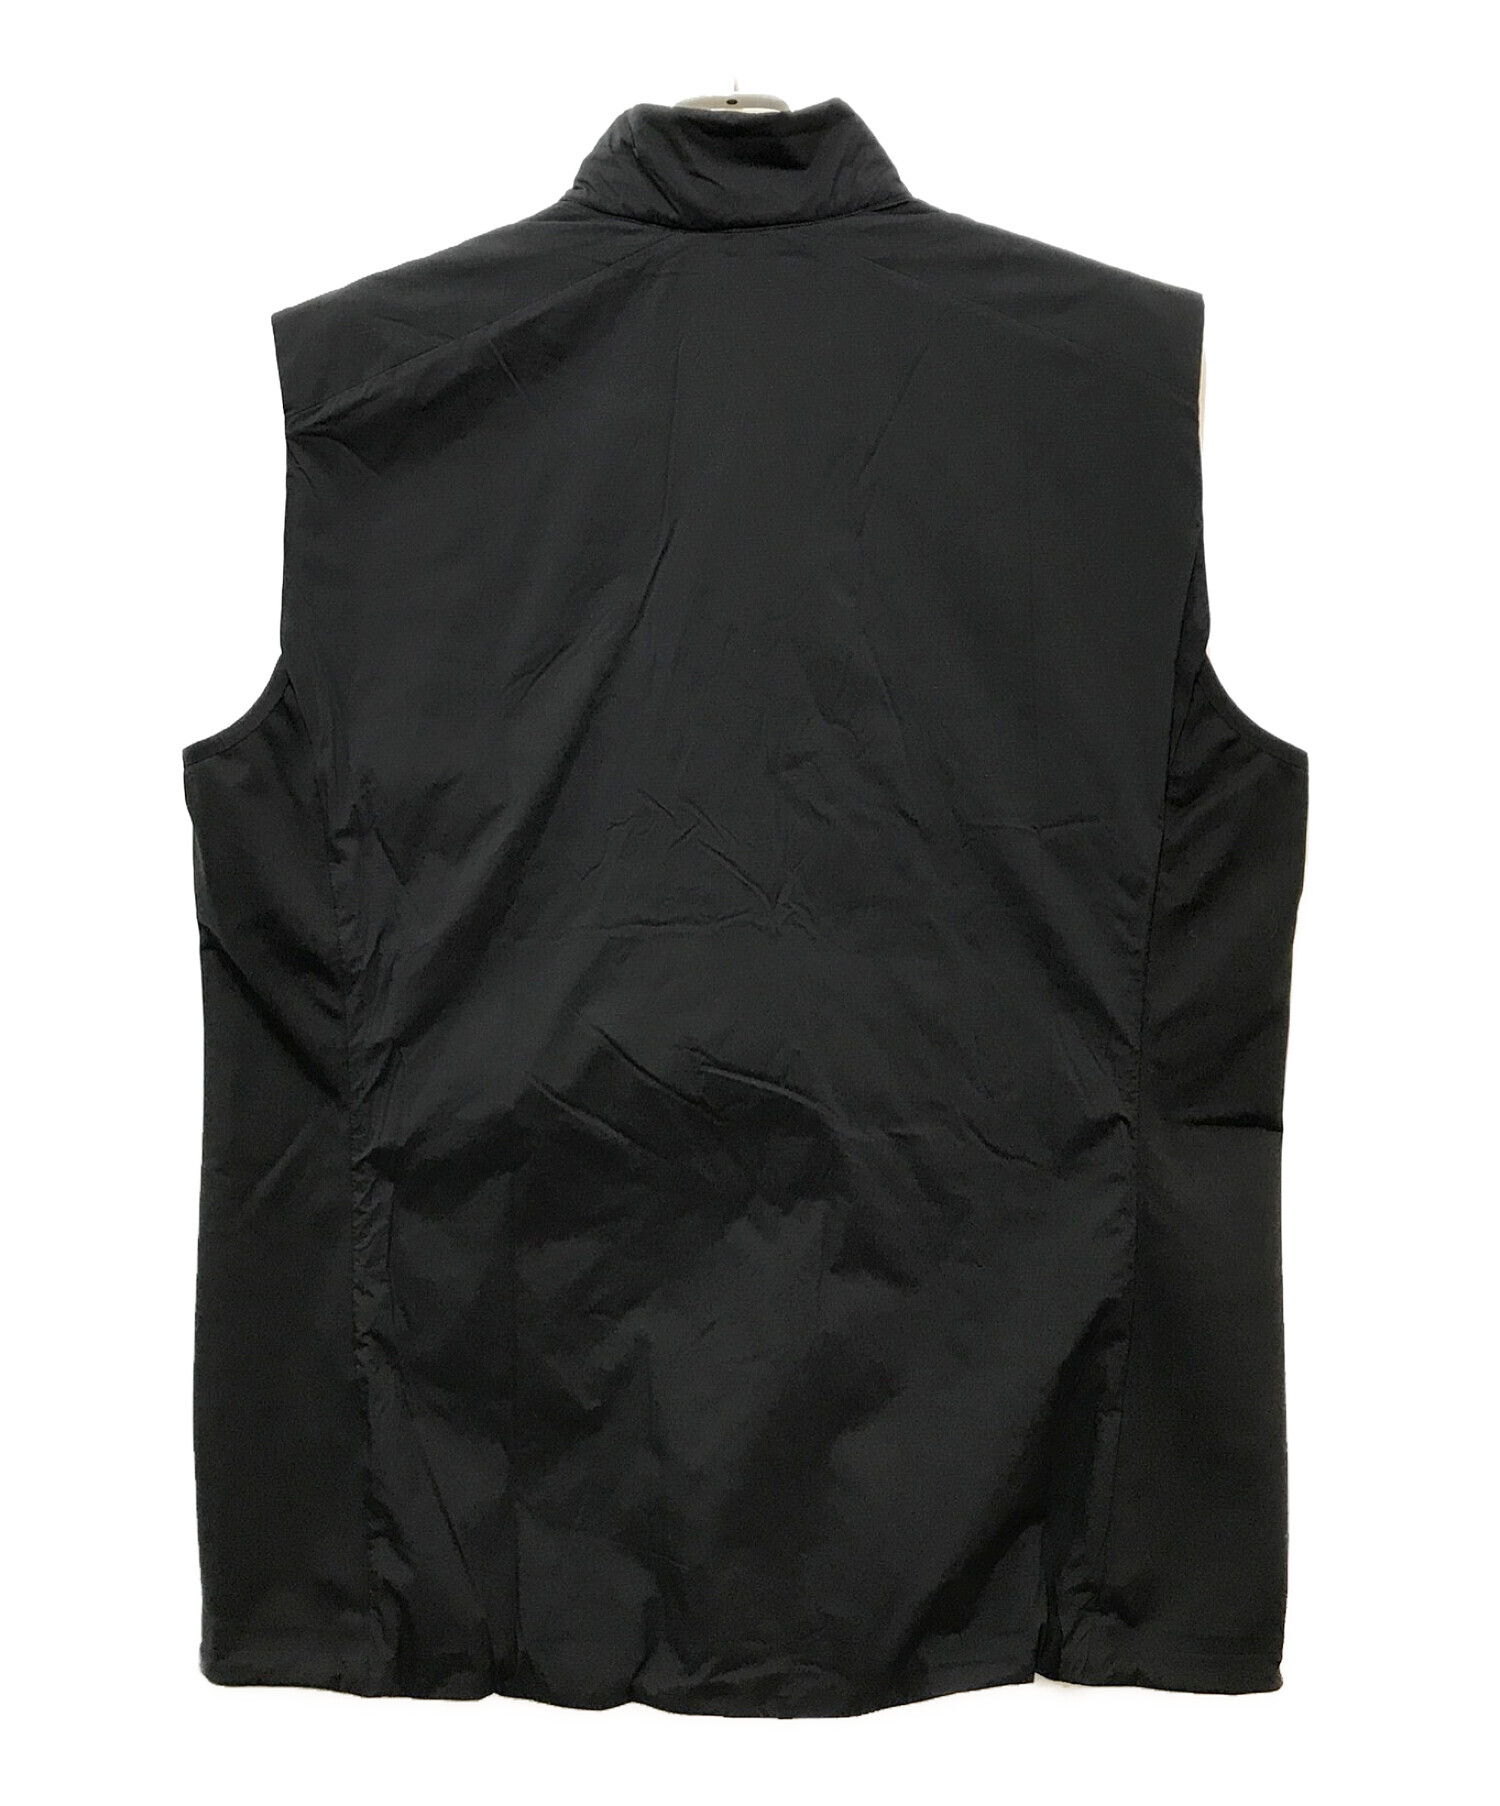 ARC'TERYX (アークテリクス) Atom LT Vest ブラック サイズ:L/G